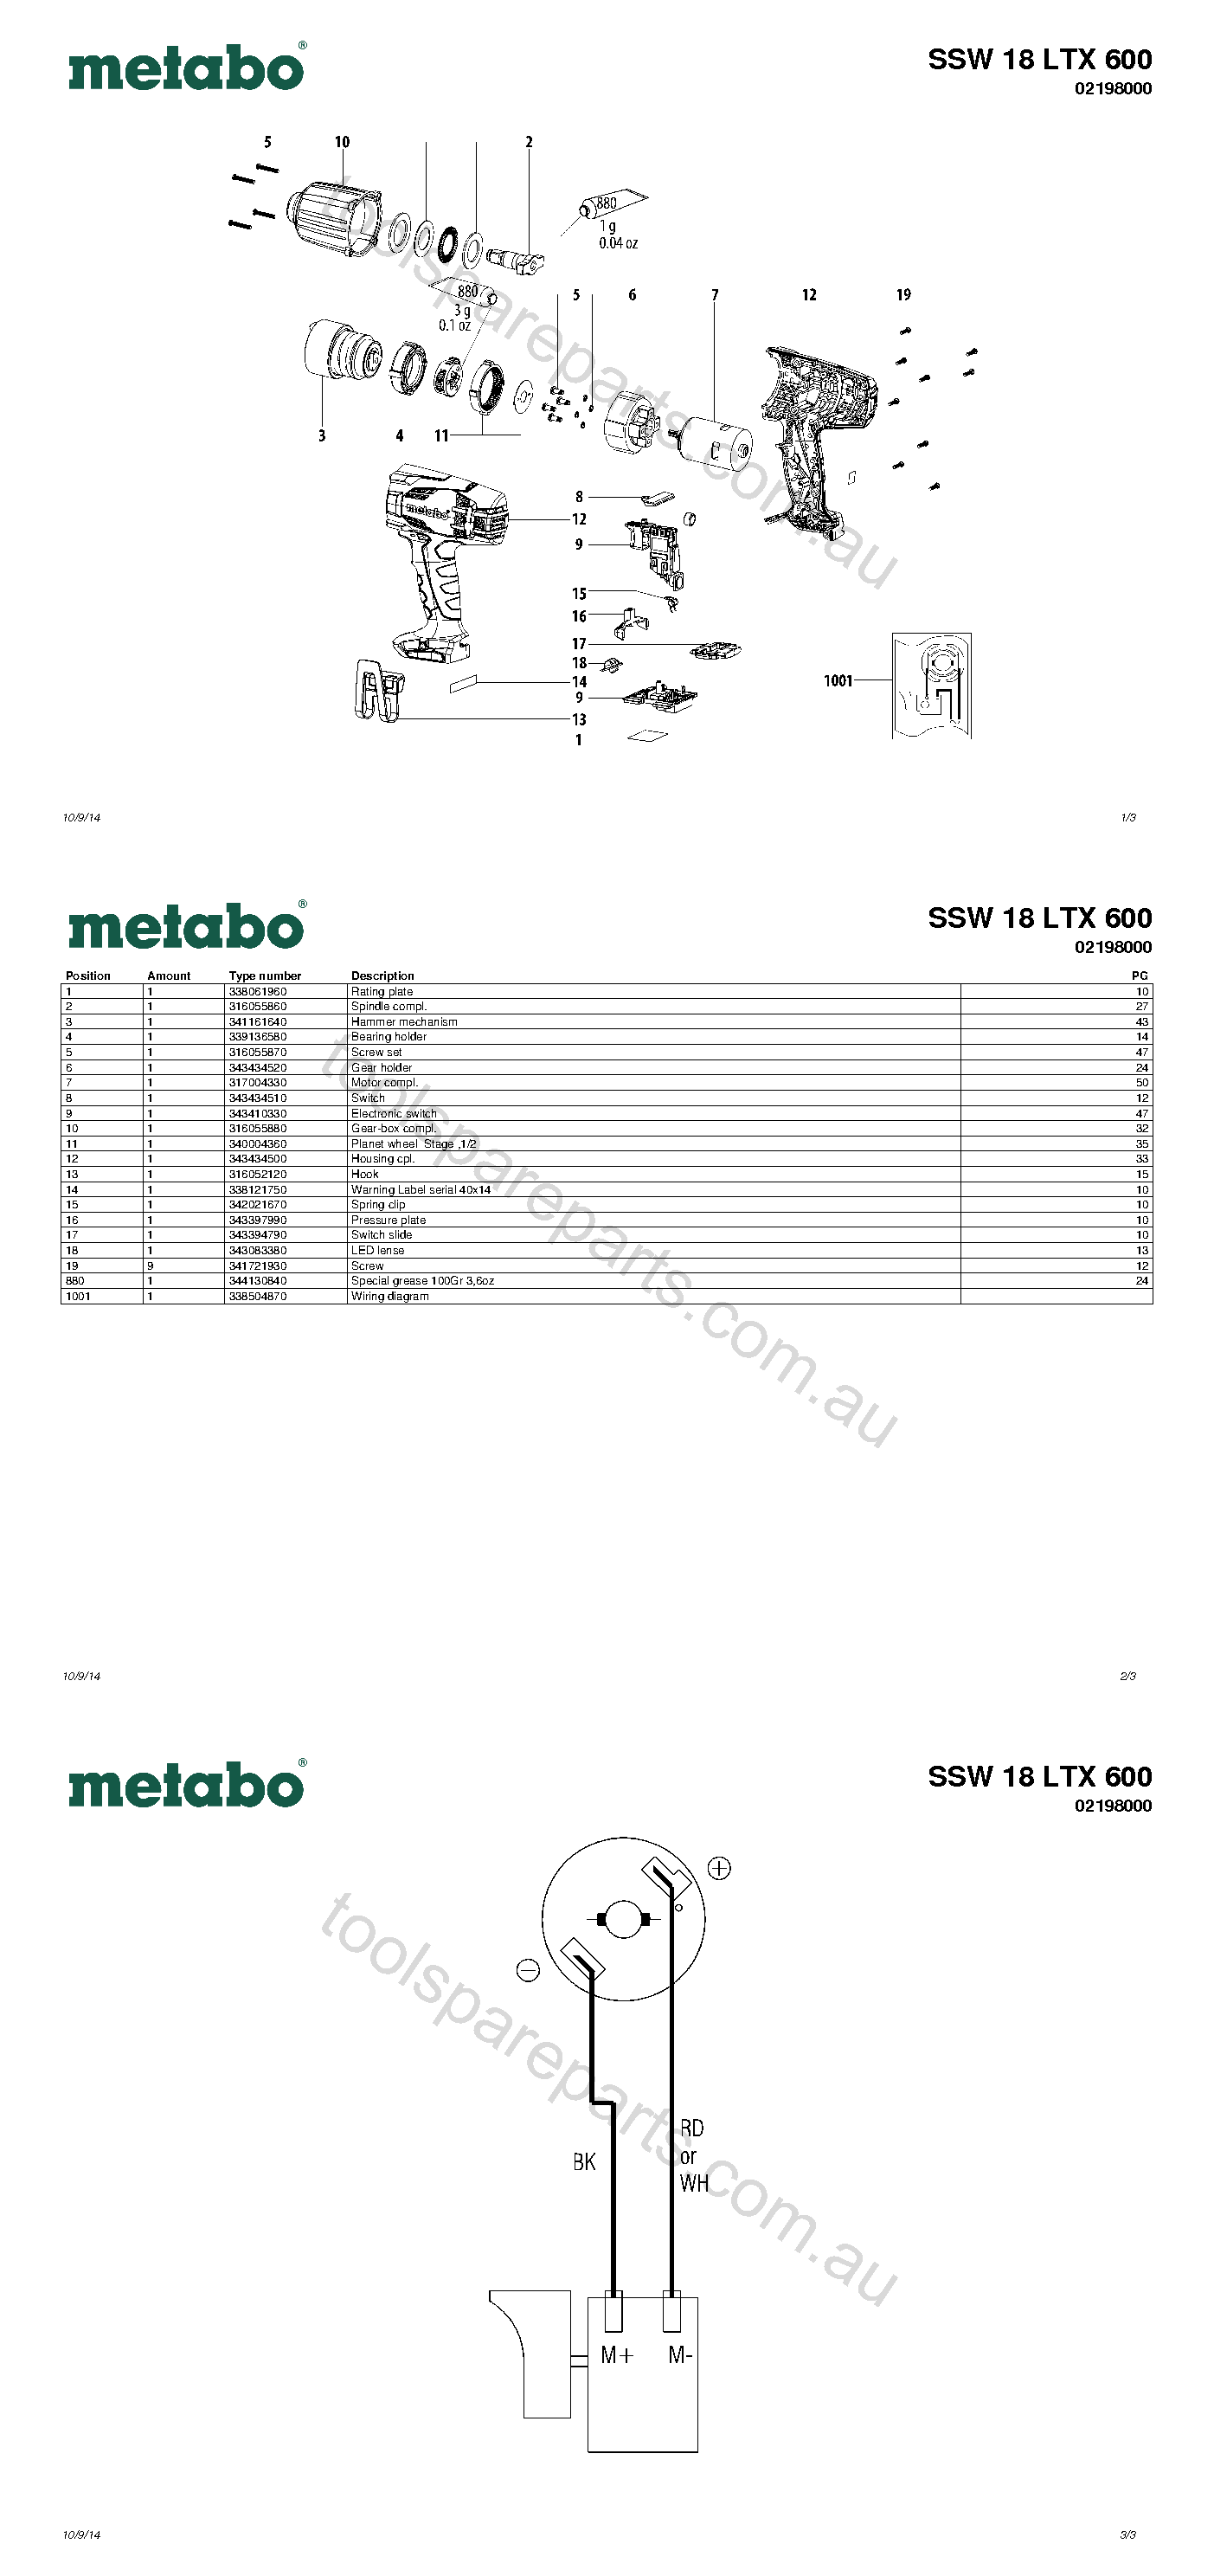 Metabo SSW 18 LTX 600 02198000  Diagram 1